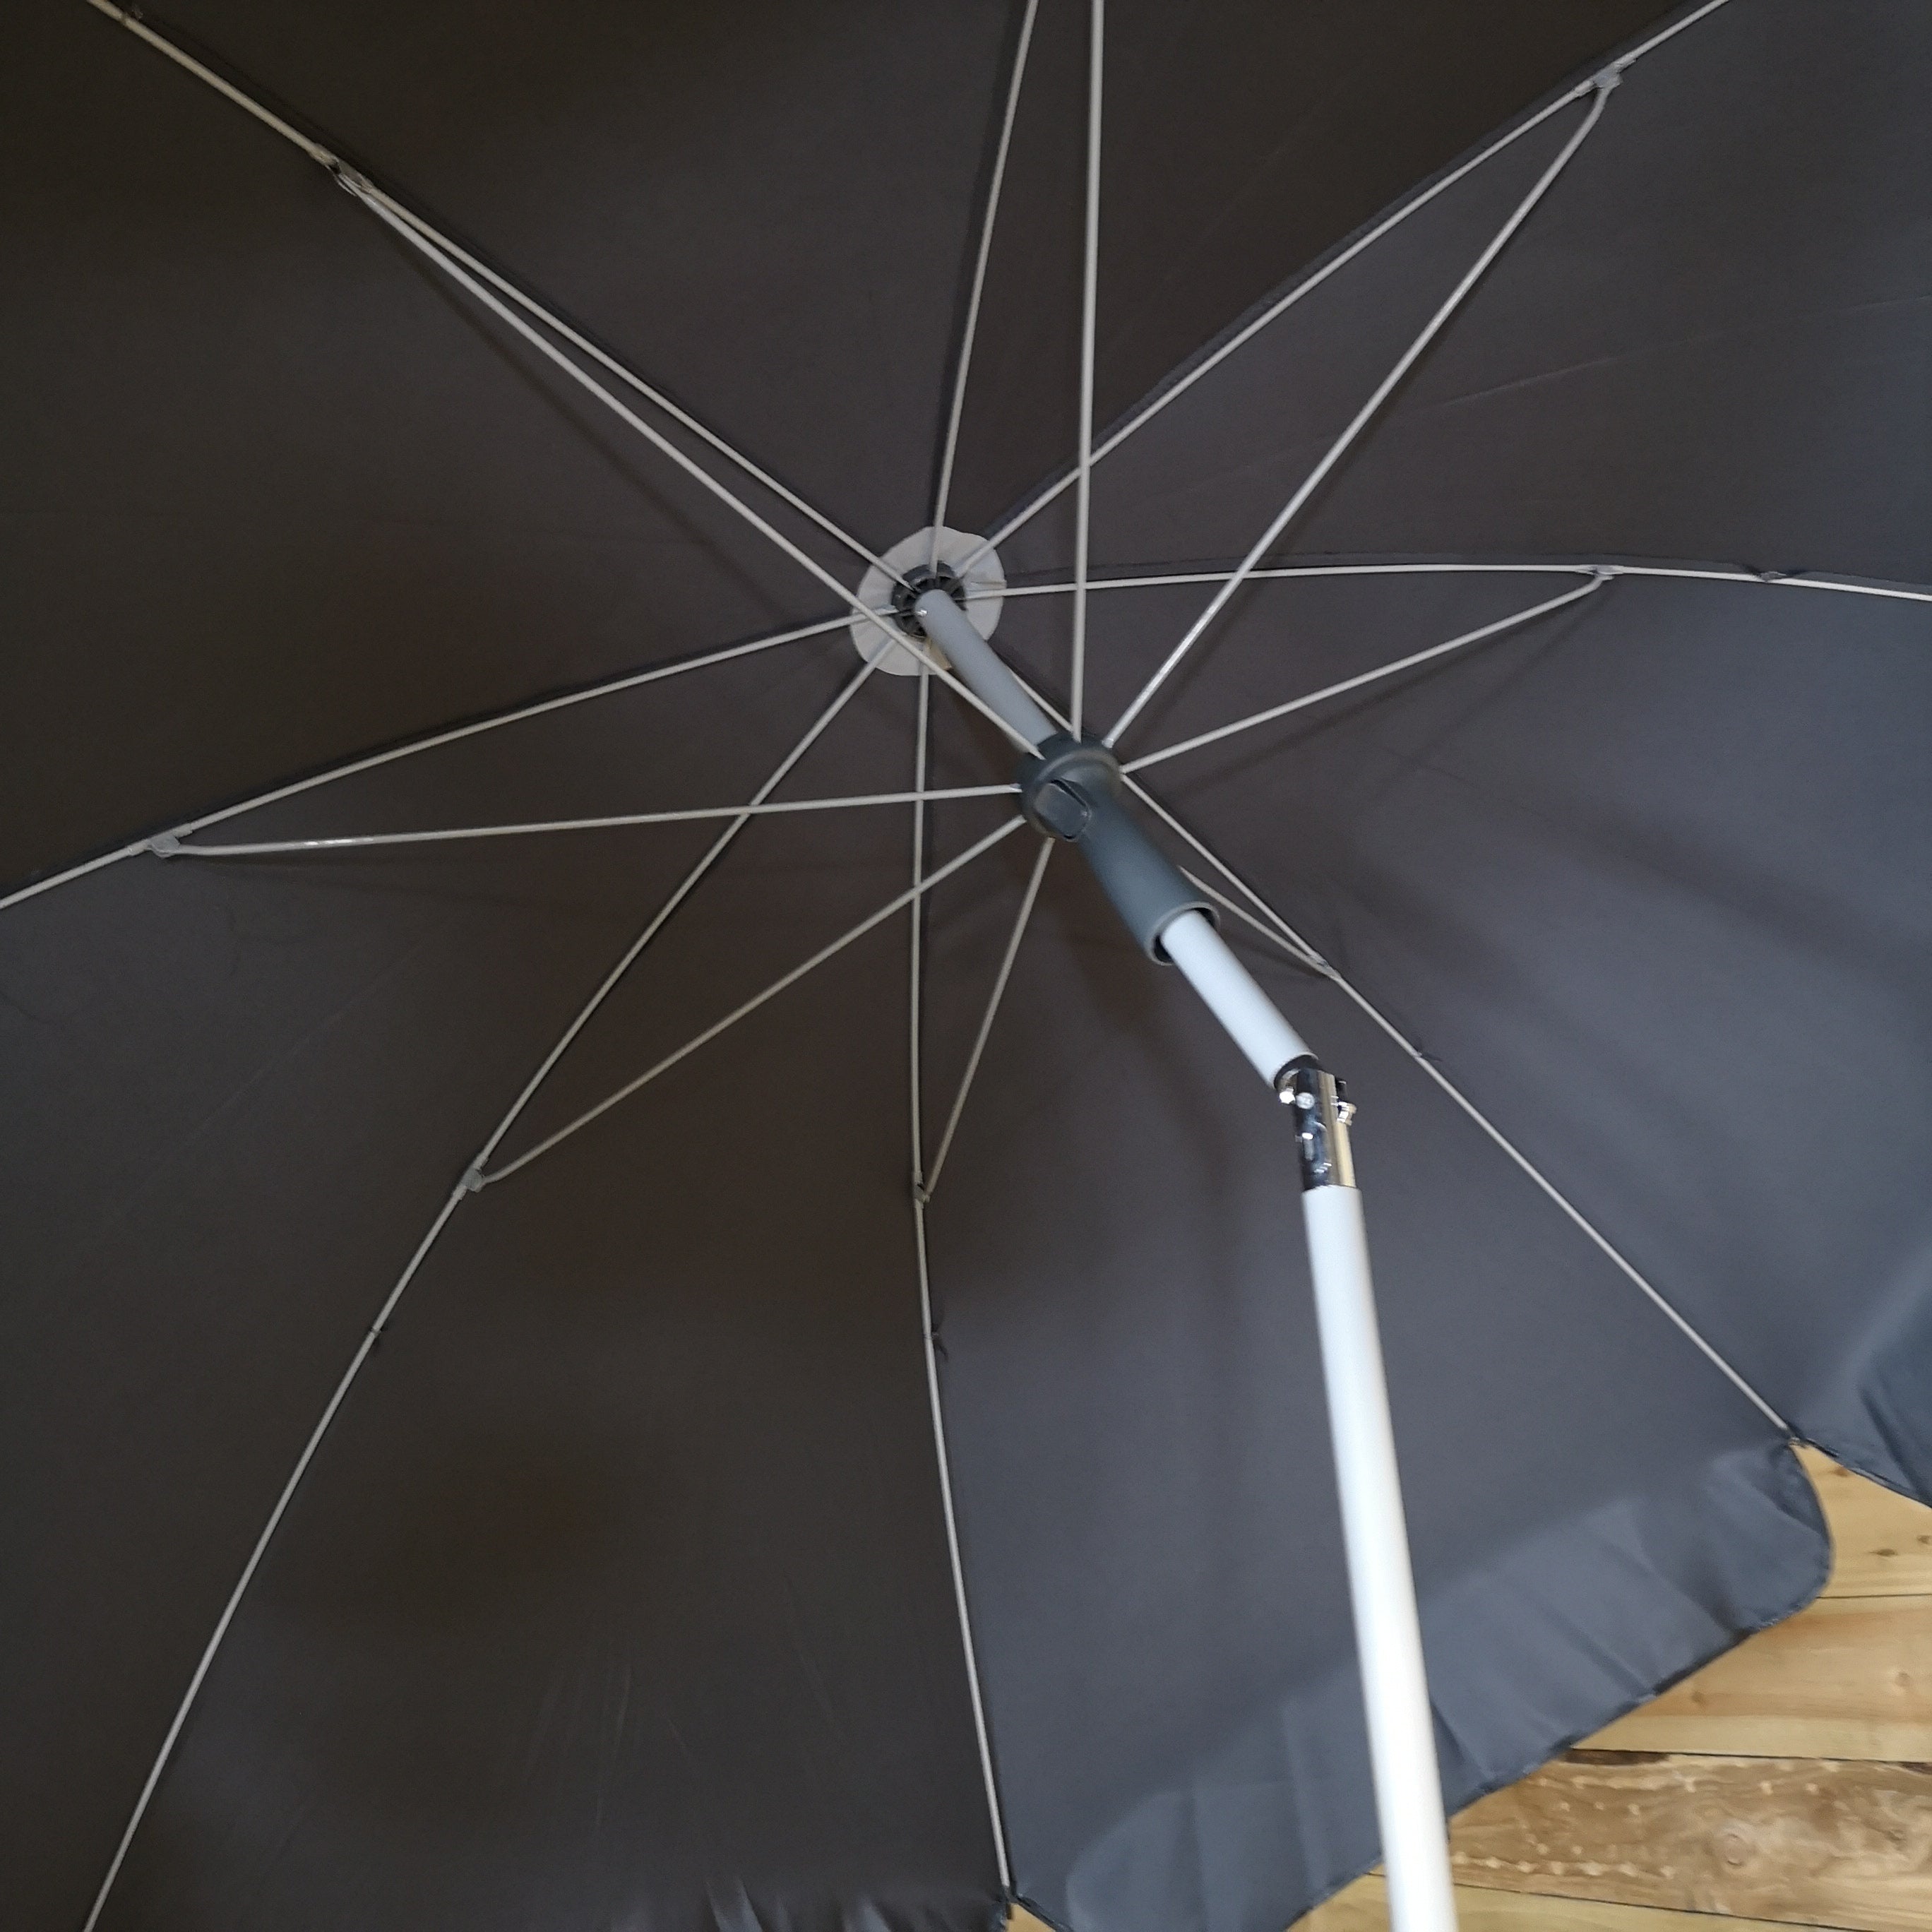 200cm Parasol Umbrella with Tilt Action in Dark Grey for Garden or Patio